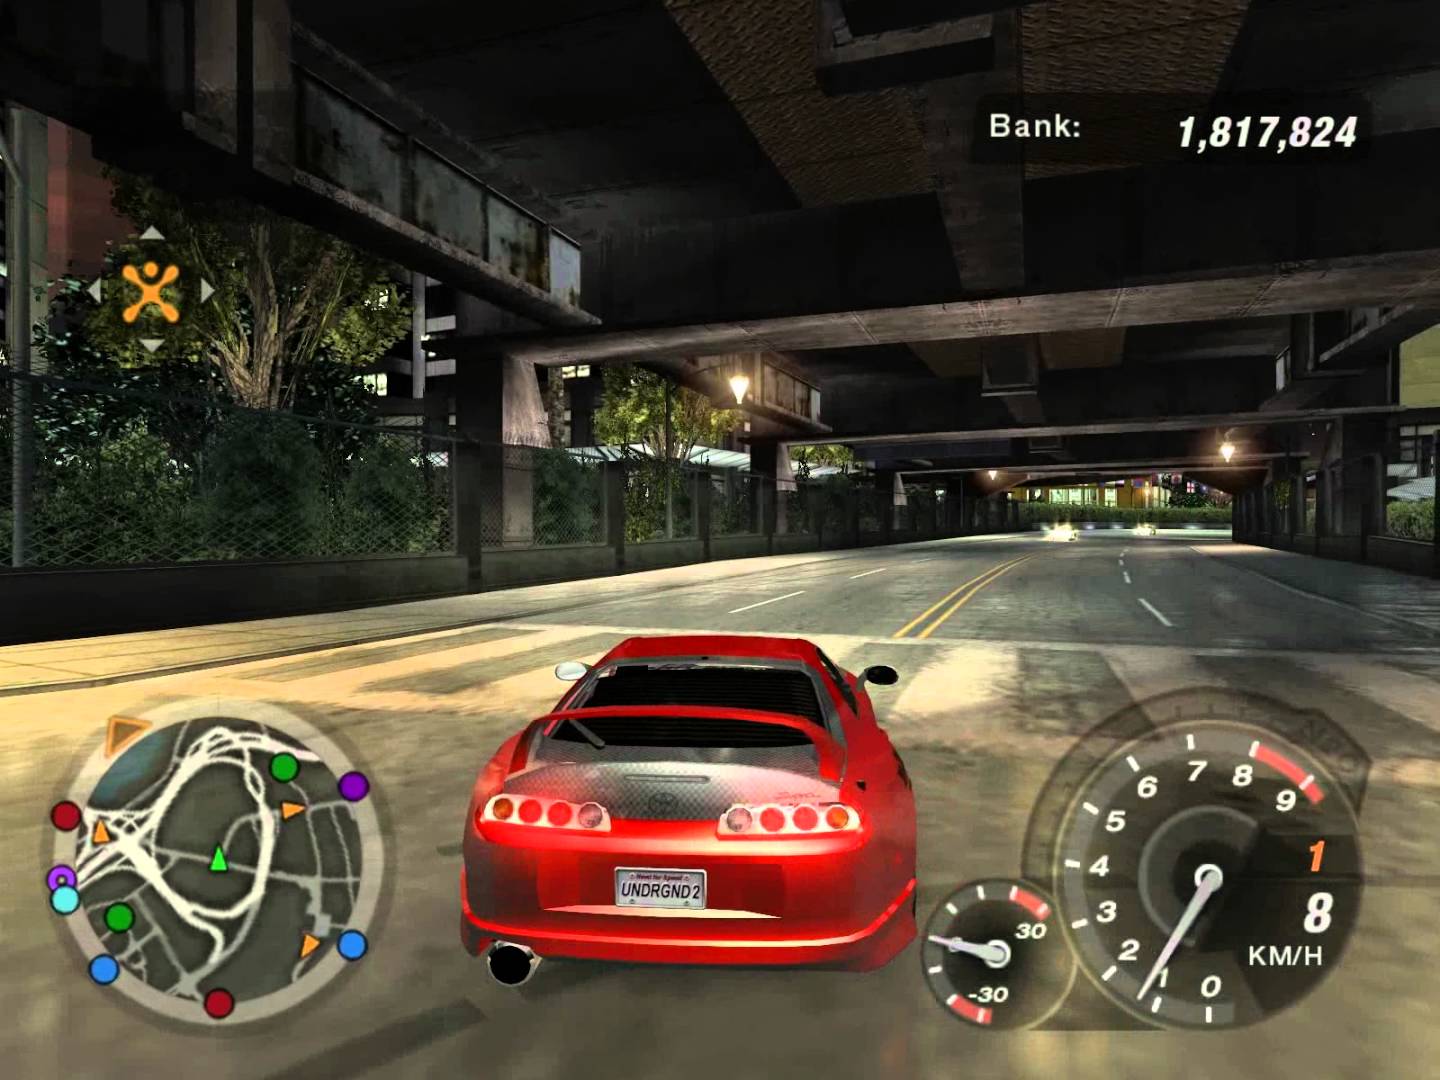 Need For Speed Underground 2 PC Game